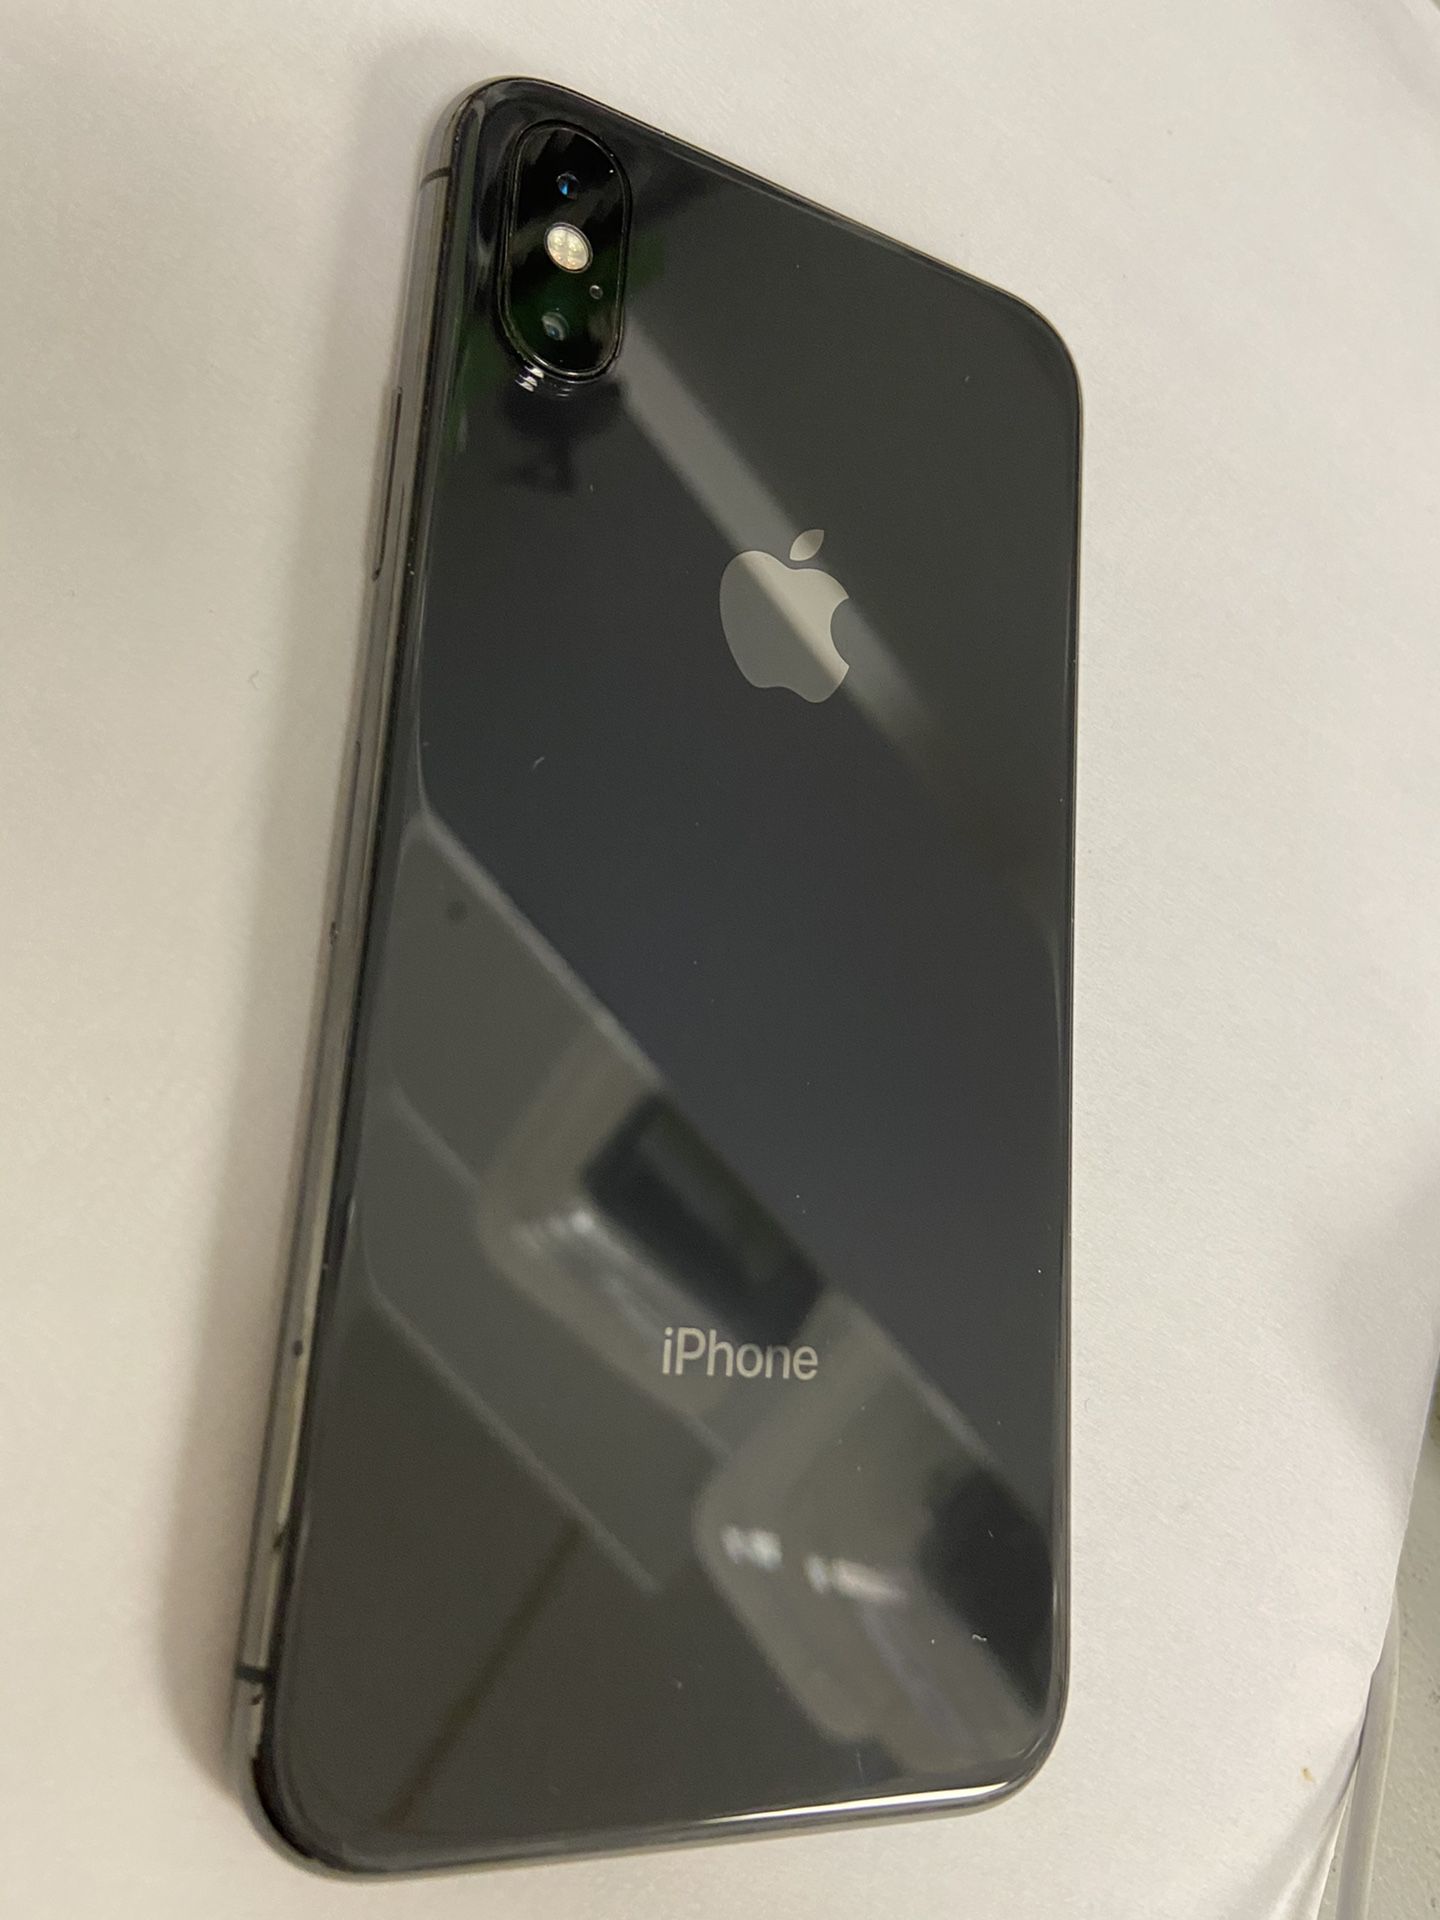 iPhone X 256gb factory unlocked warranty